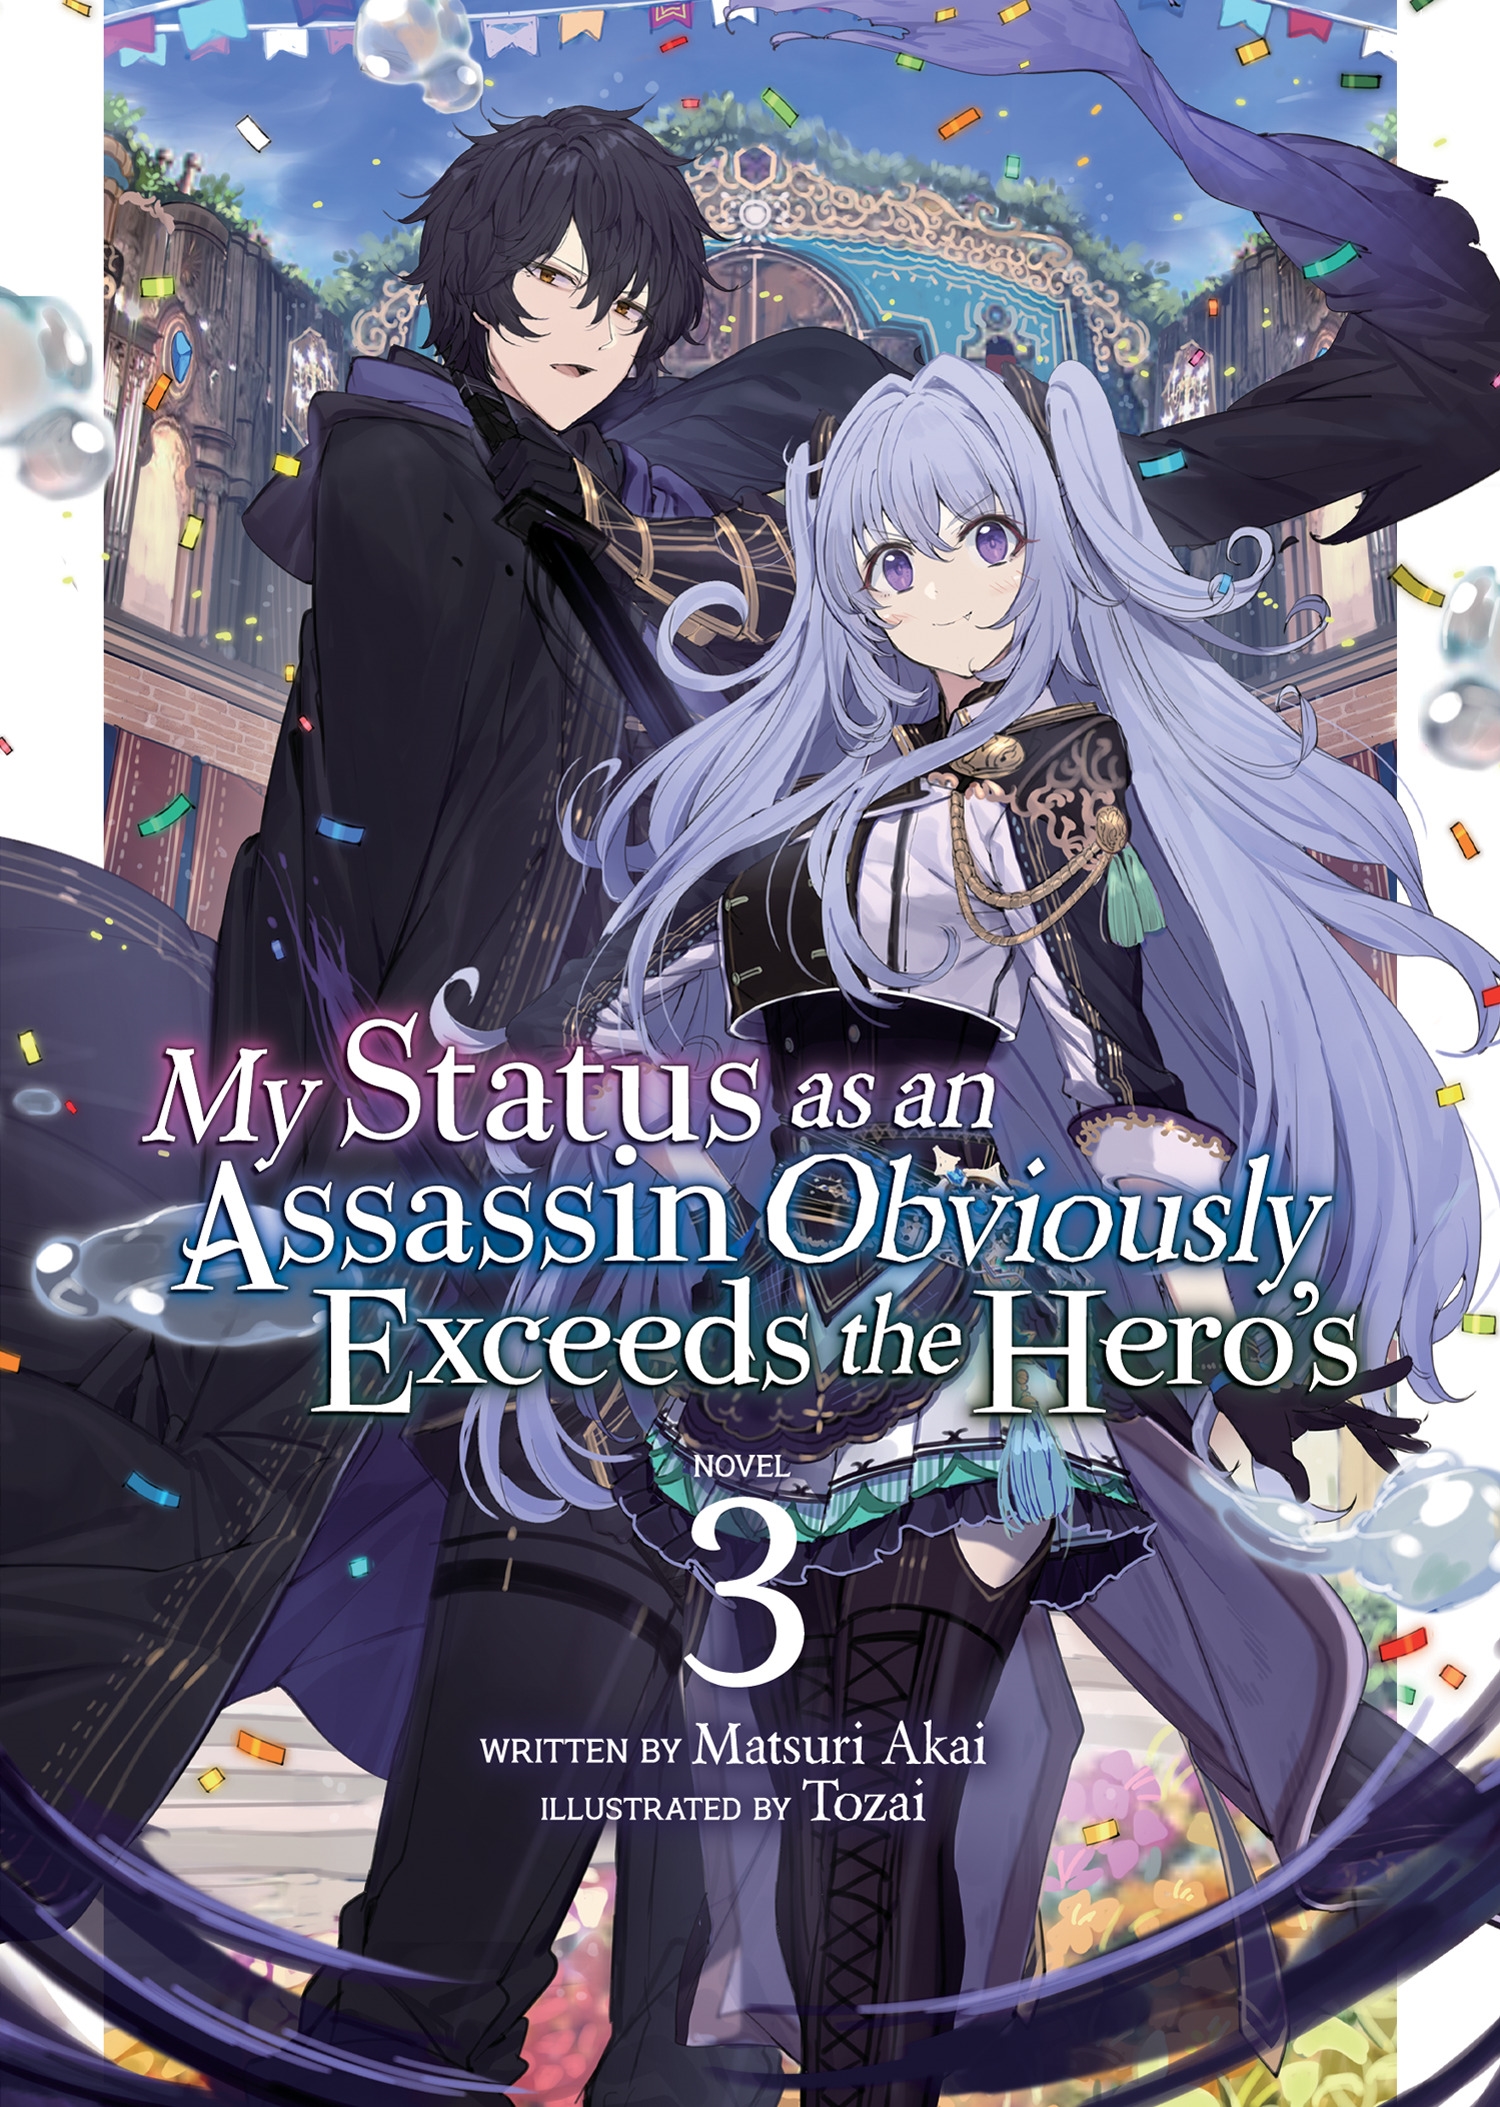 My Status as an Assassin Obviously Exceeds the Hero's (Light Novel) Vol. 3  by Matsuri Akai - Penguin Books Australia